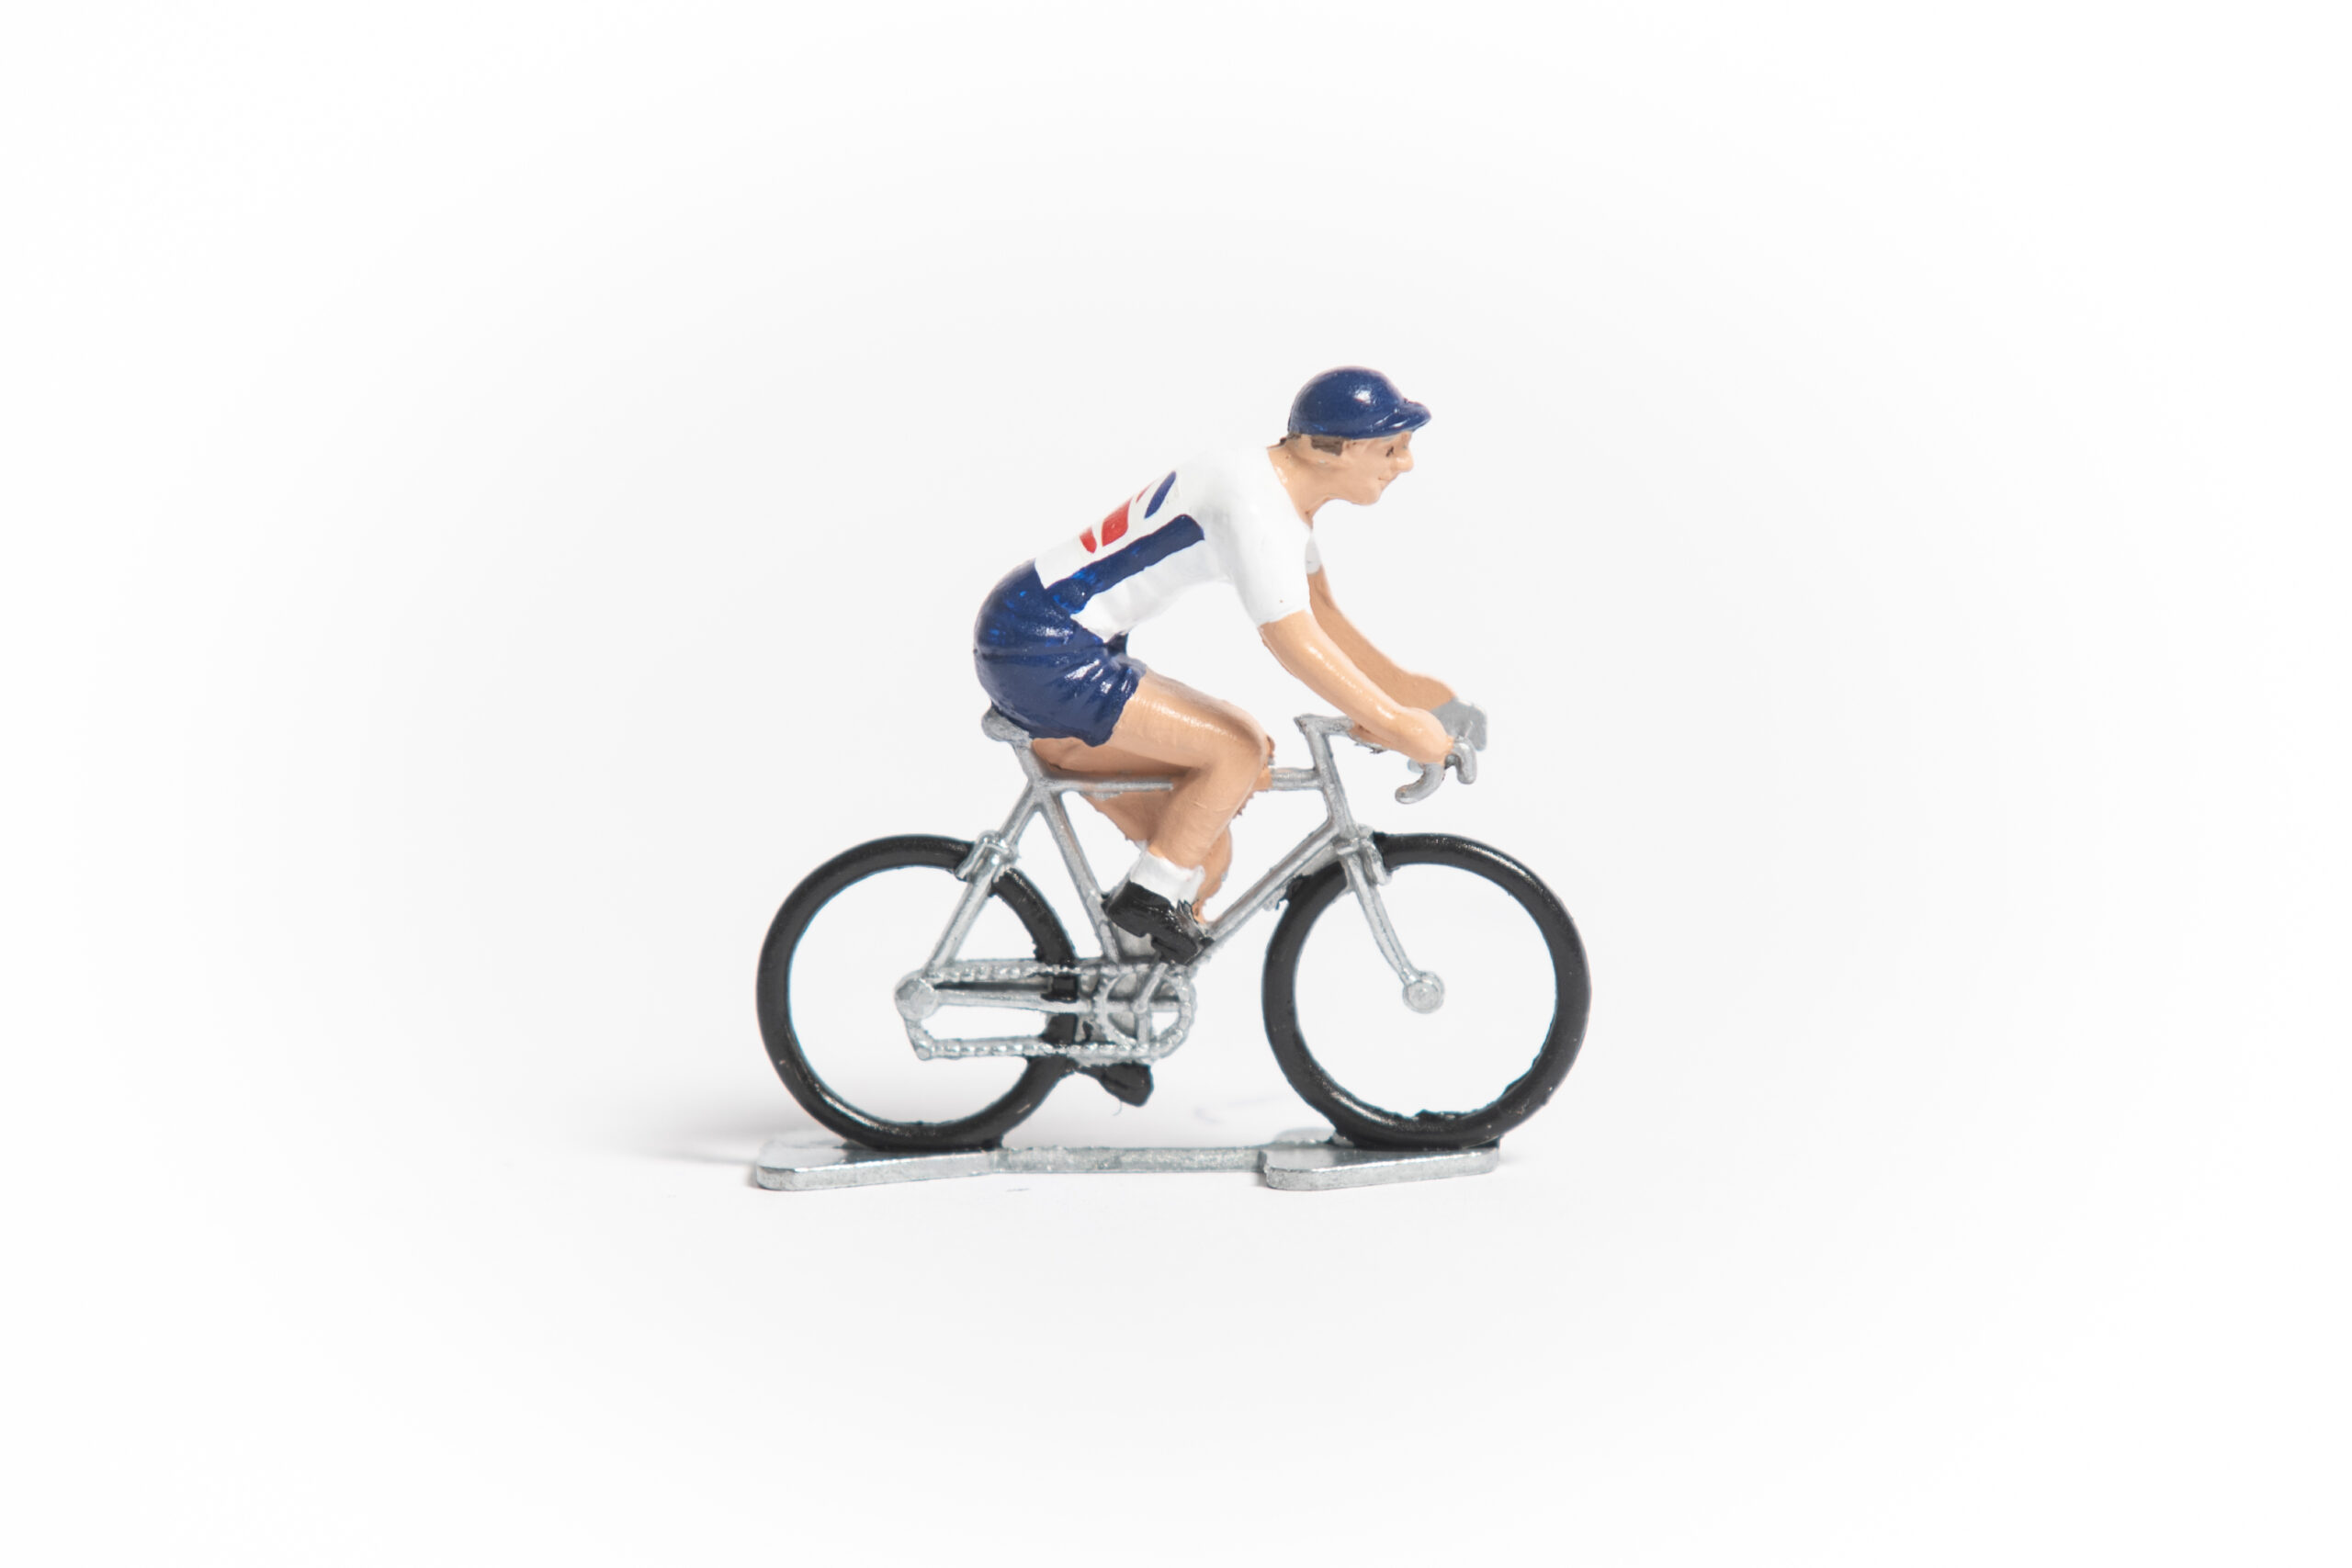 Great Britain mini cyclist figurine